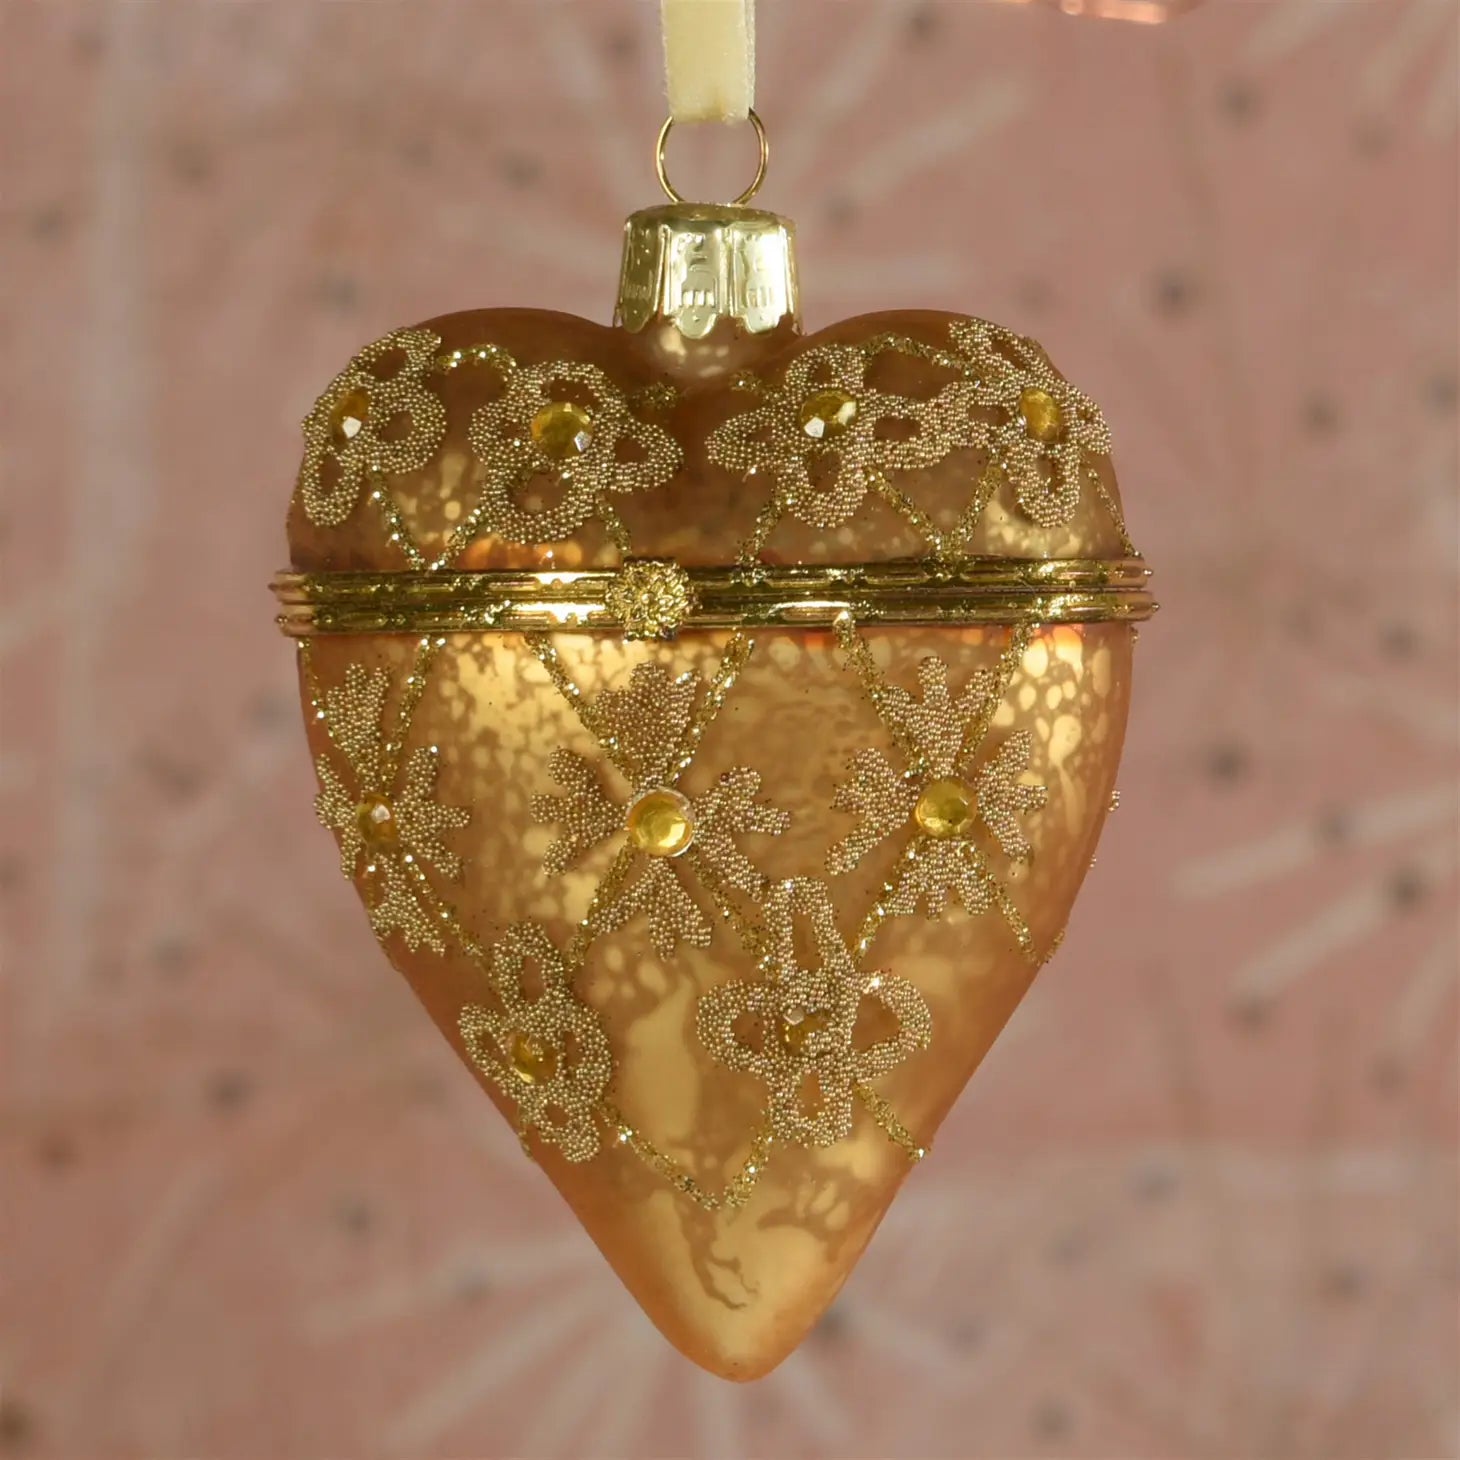 Ornament- Bejewelled Heart Locket